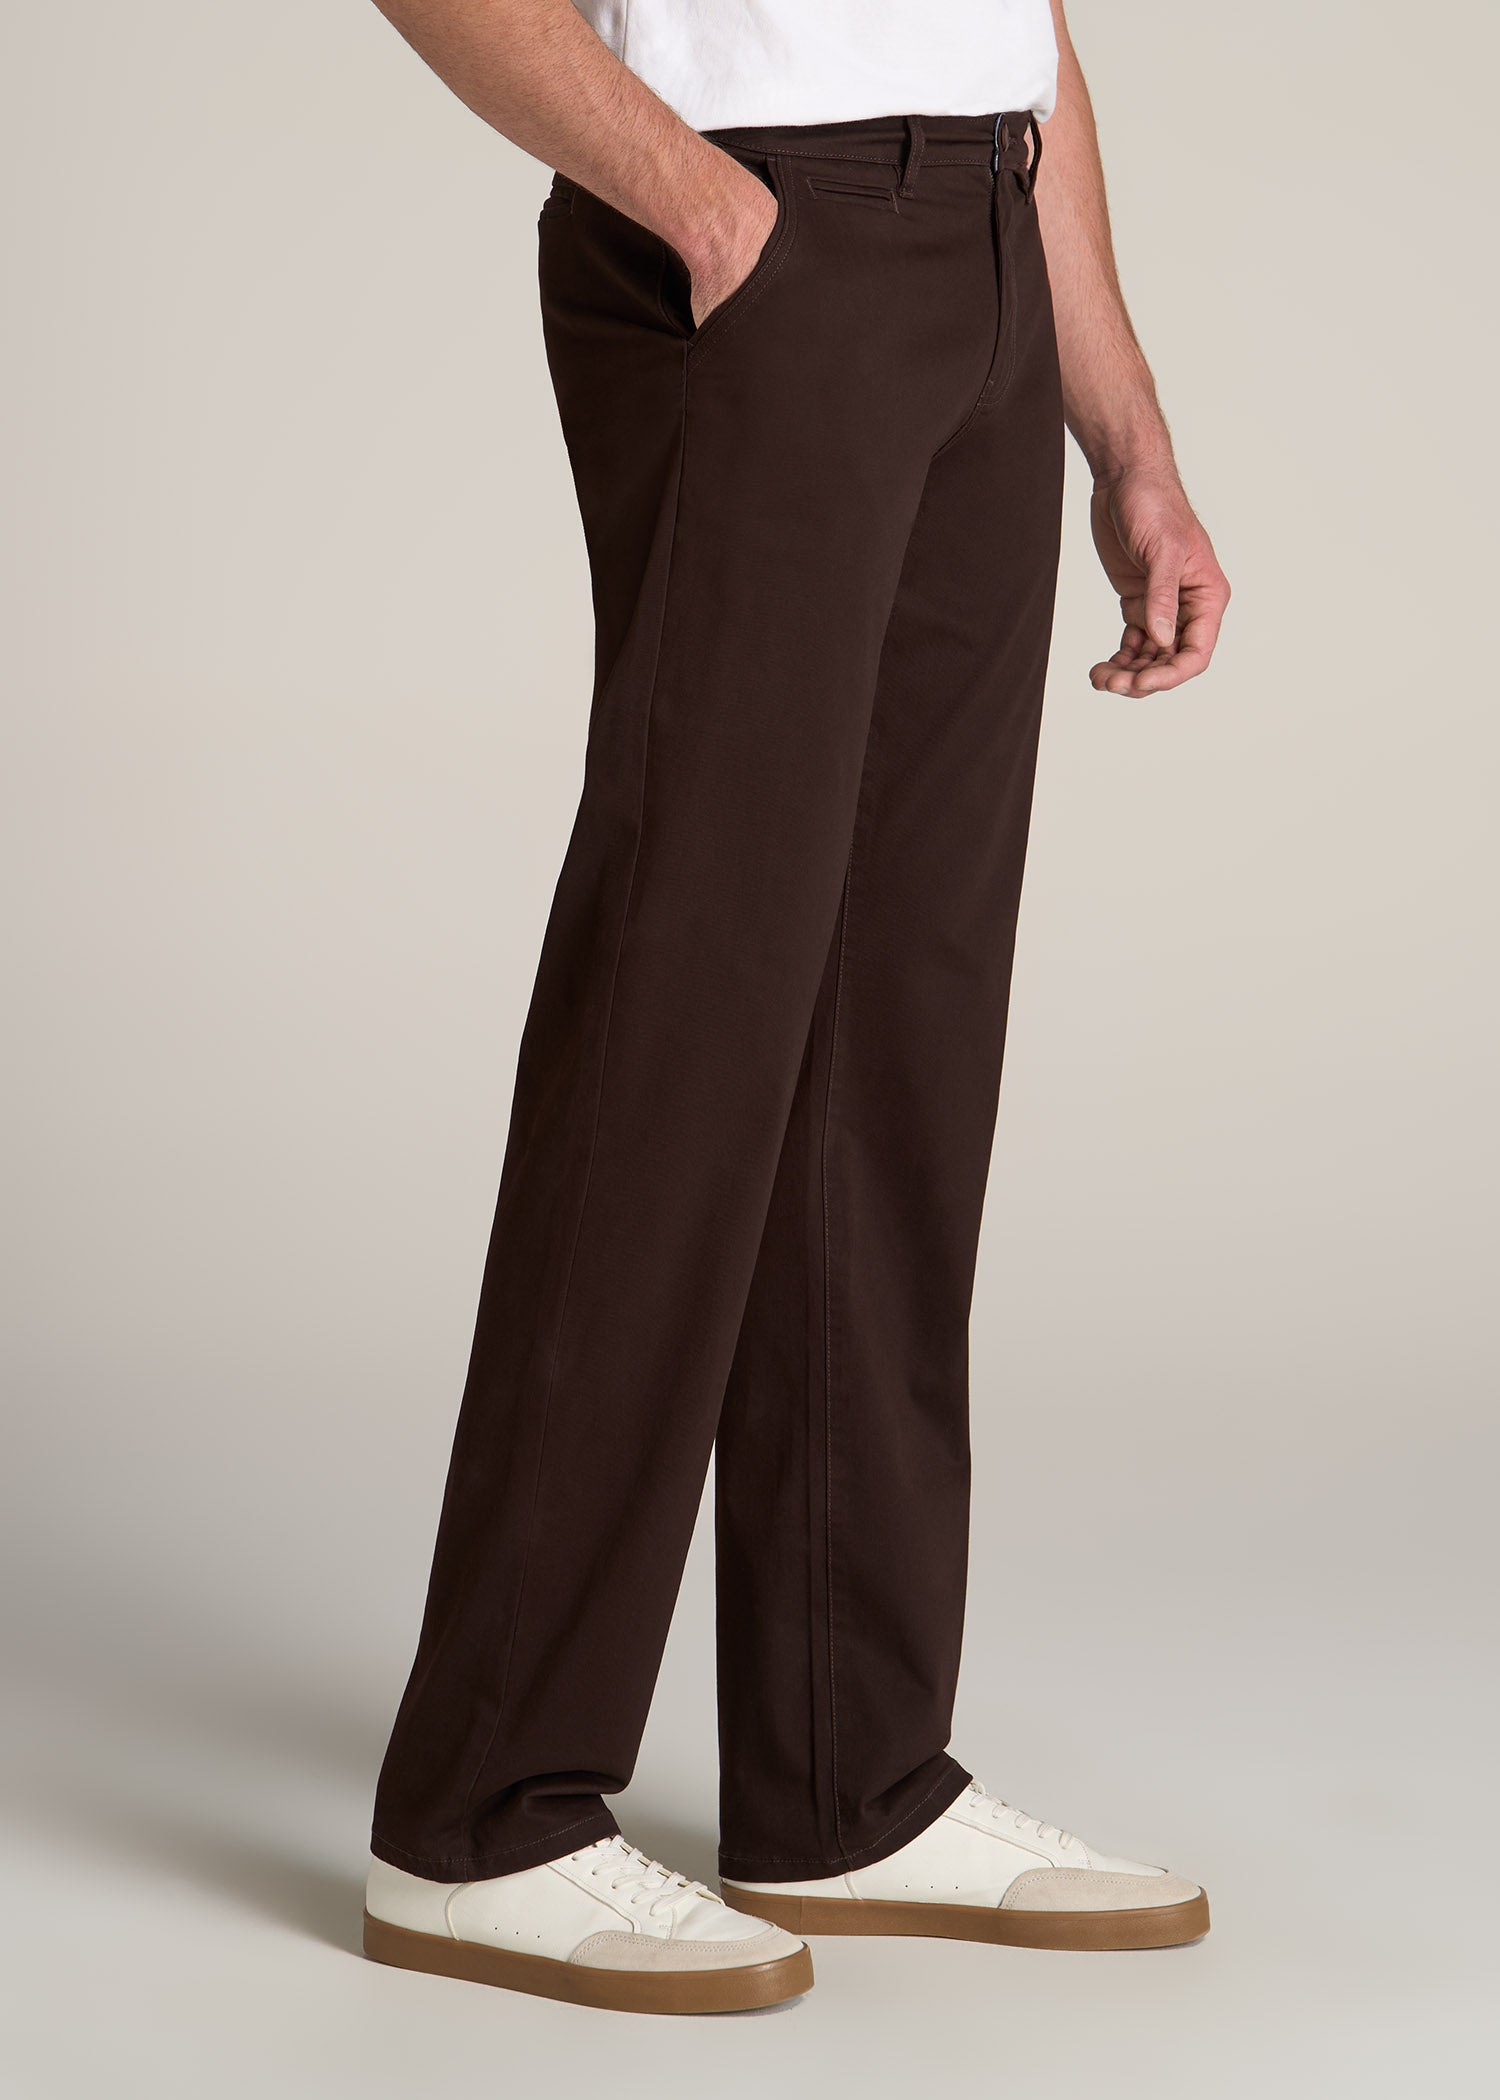 Buy Black Trousers & Pants for Men by Thomas Scott Online | Ajio.com